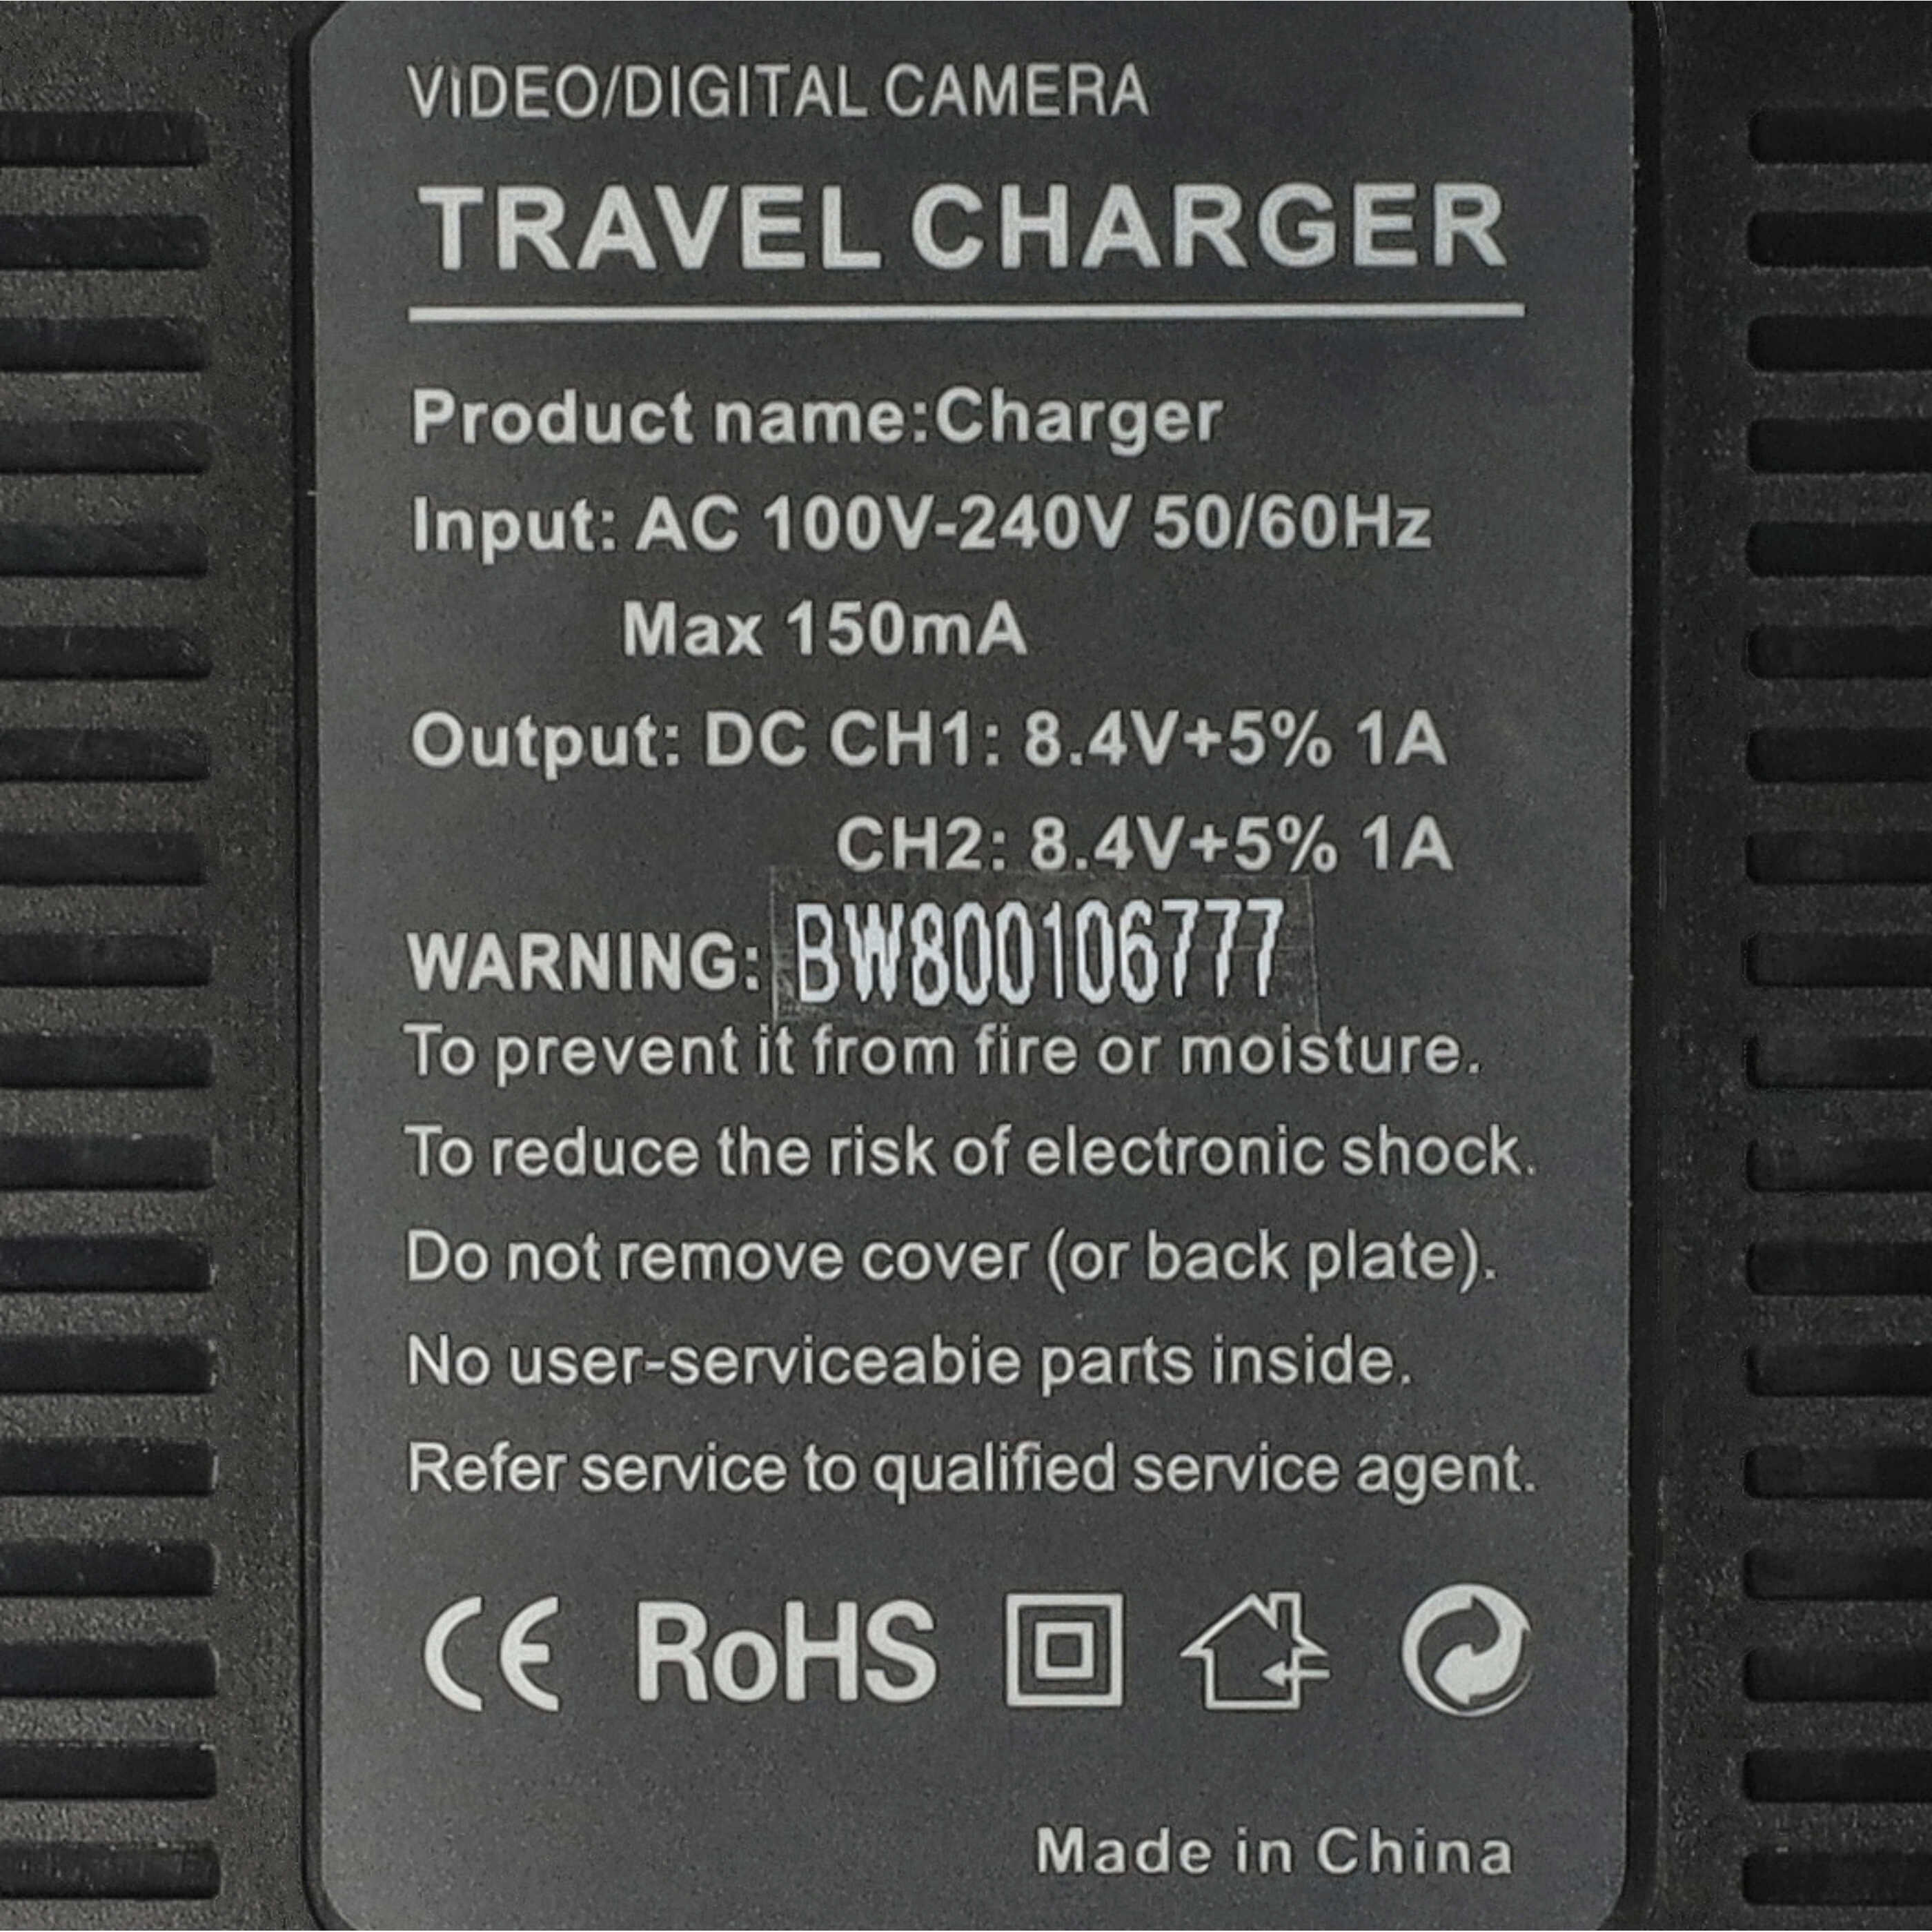 Ładowarka do aparatu D3000 i innych - ładowarka akumulatora 0.5 / 0.9 A, 4.2/8.4 V